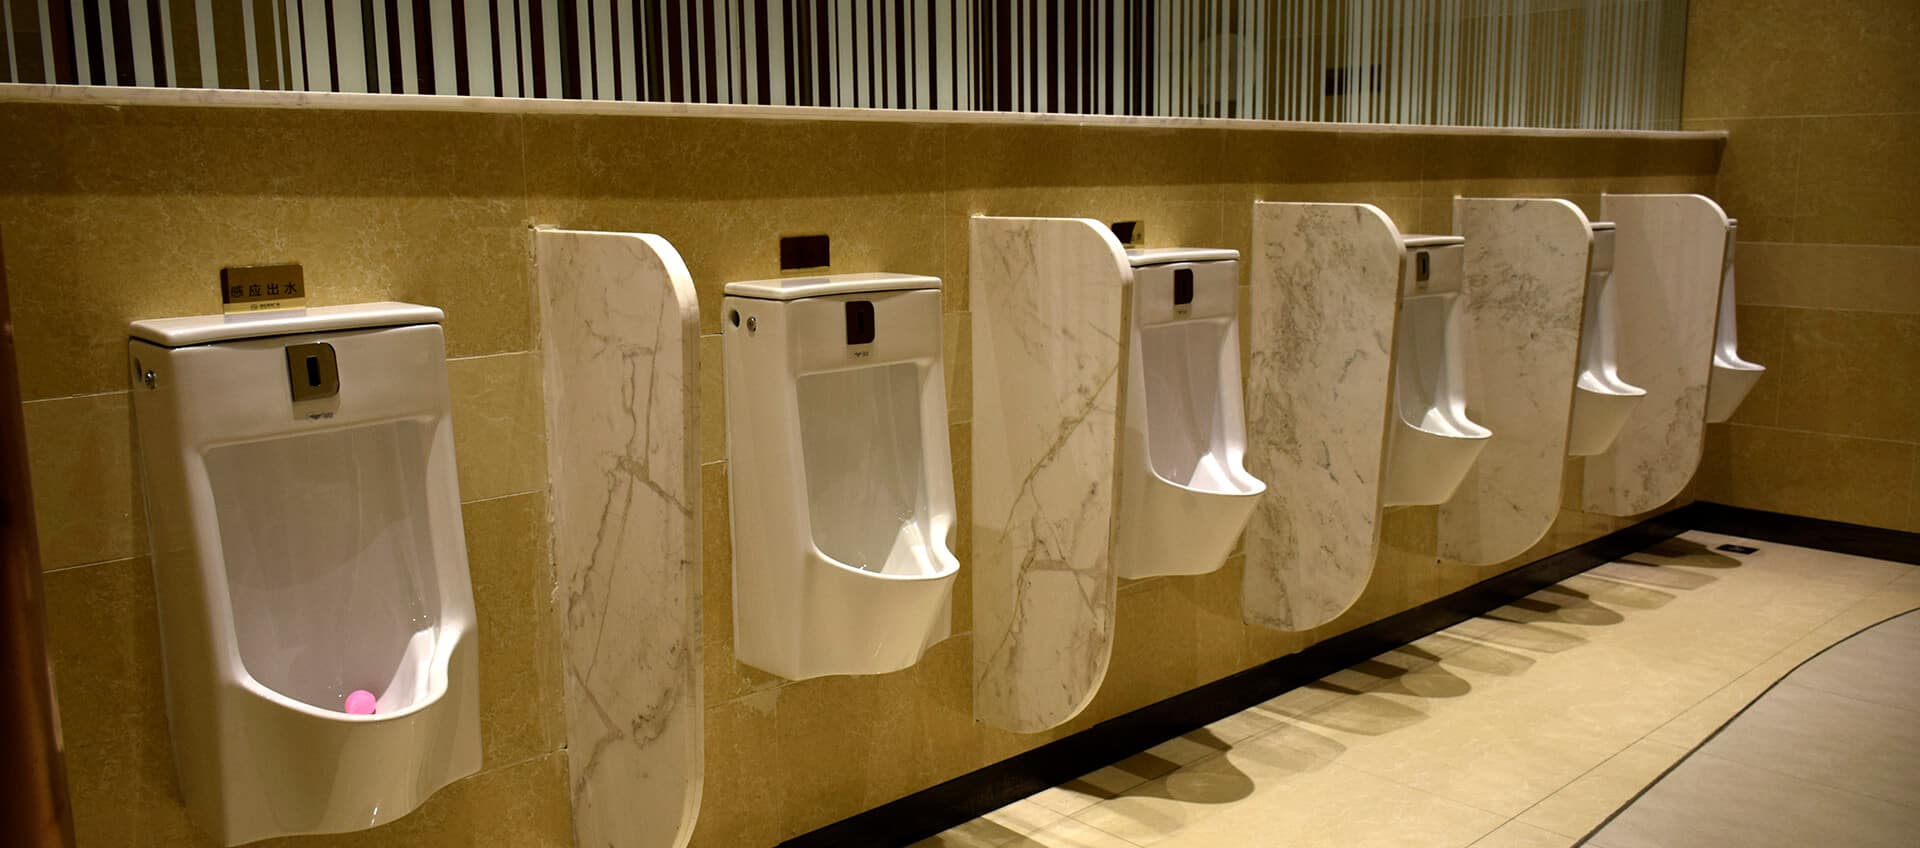 White Ceramic Concealed Urinal Flusher public toilet